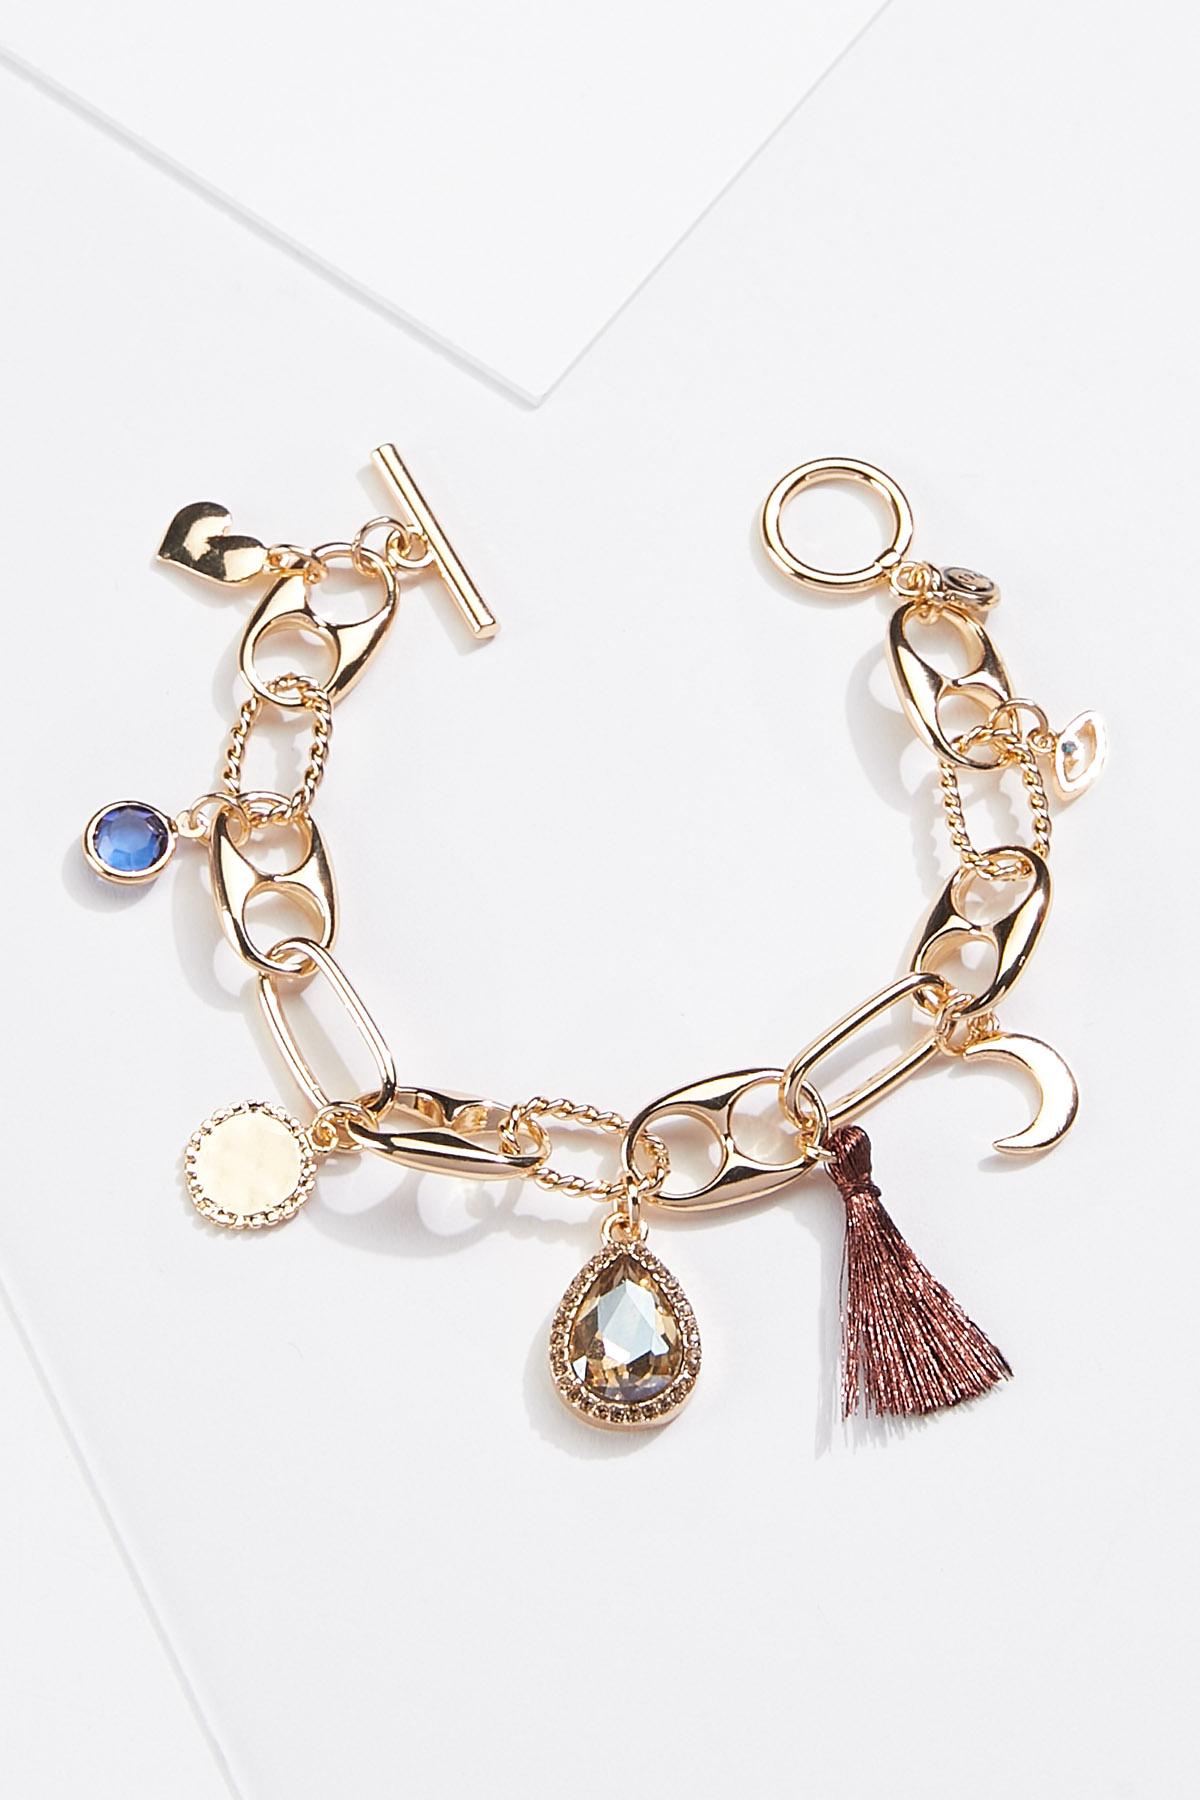 Celestial Bead Necklace Earring Set